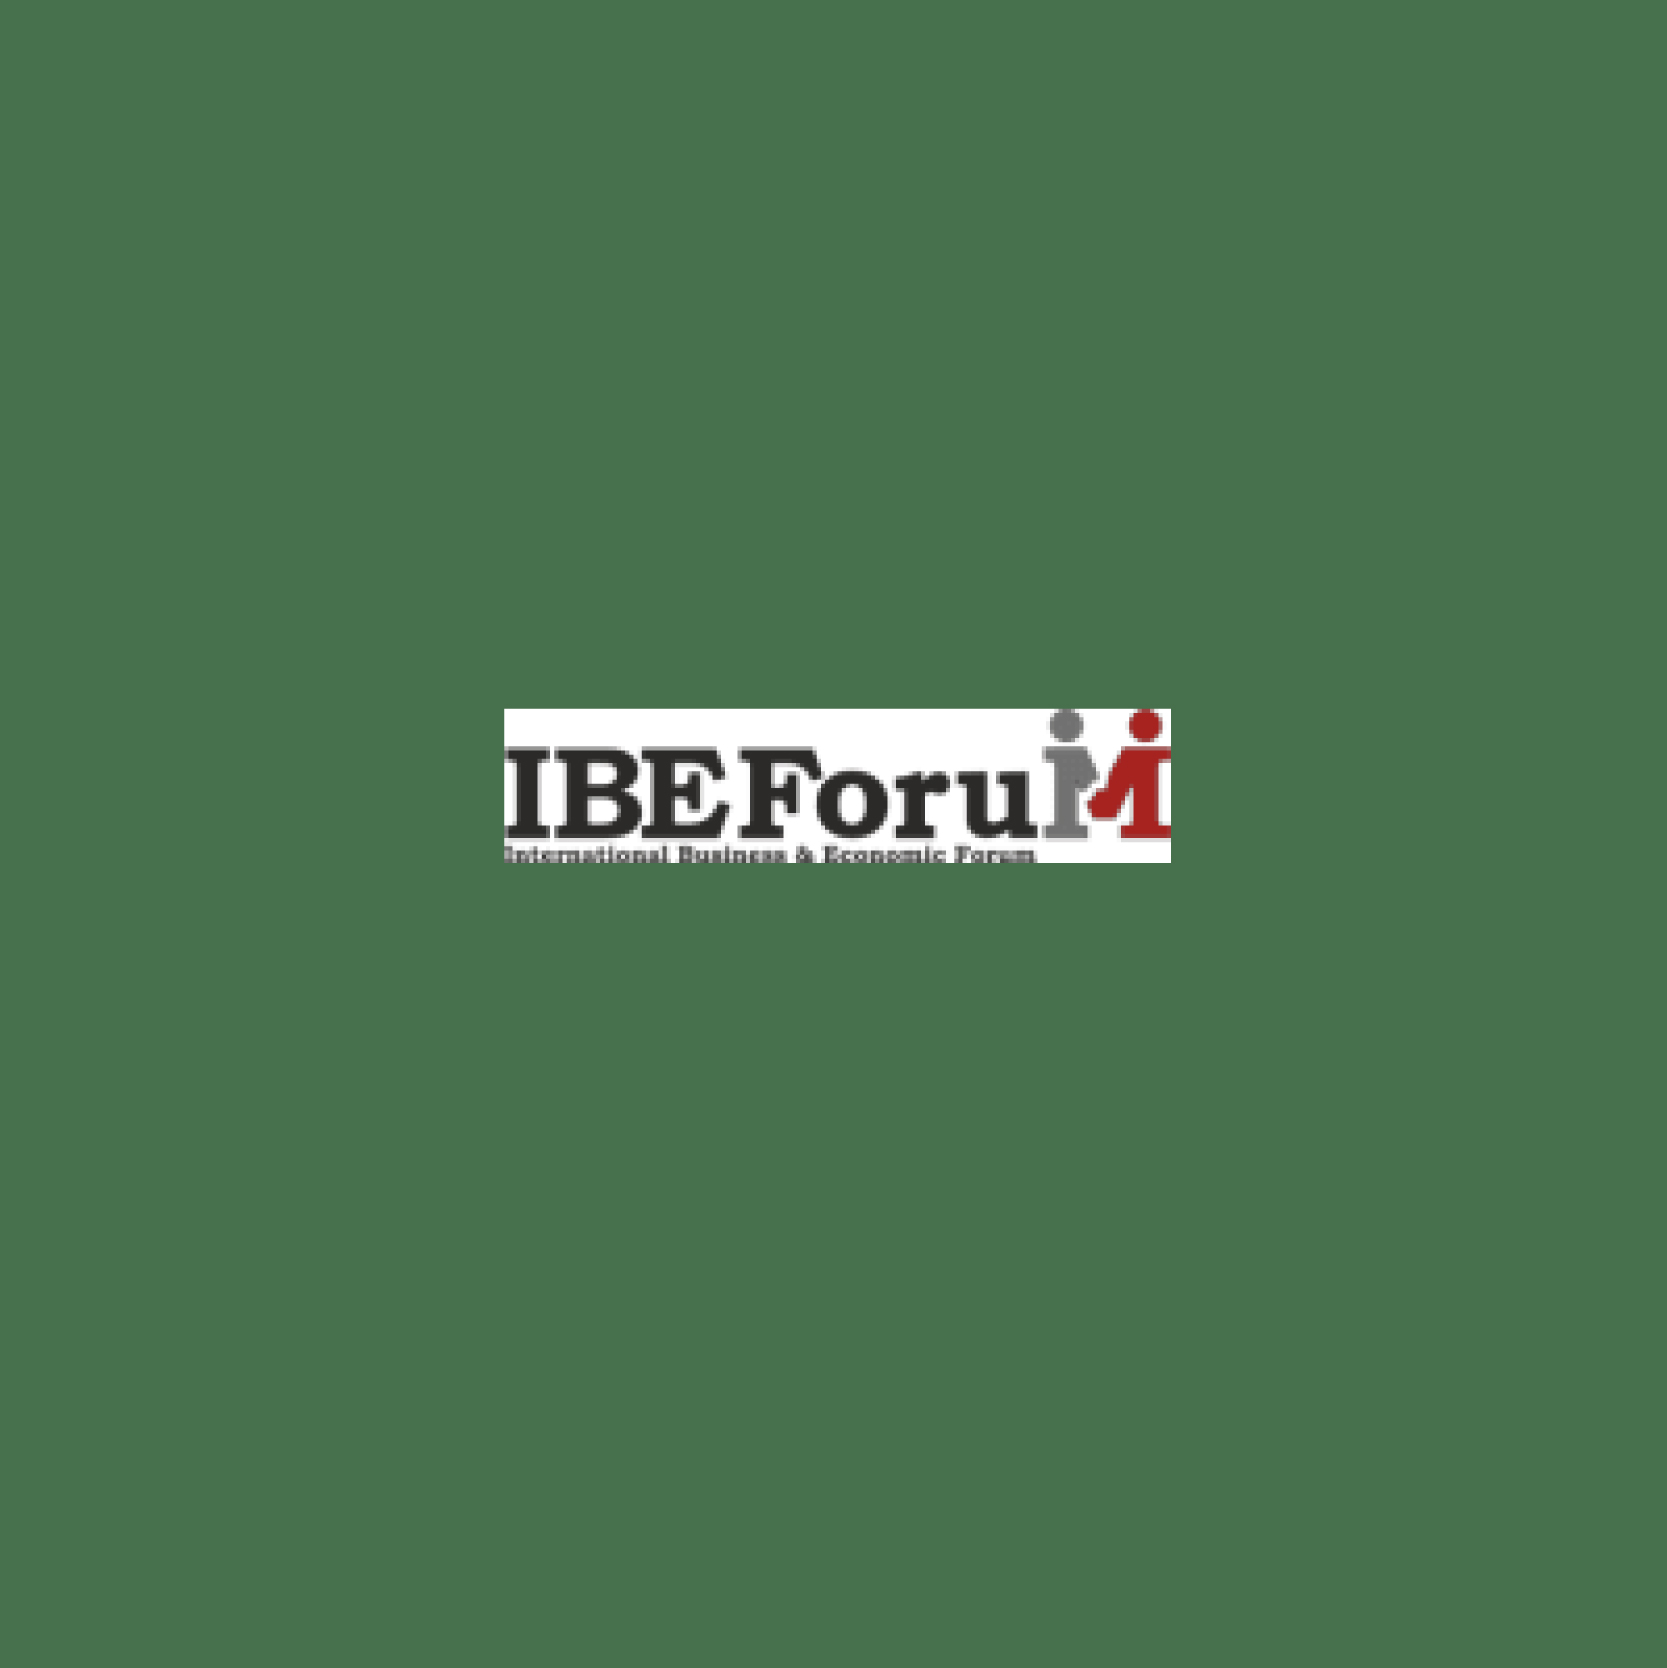 IBE forum